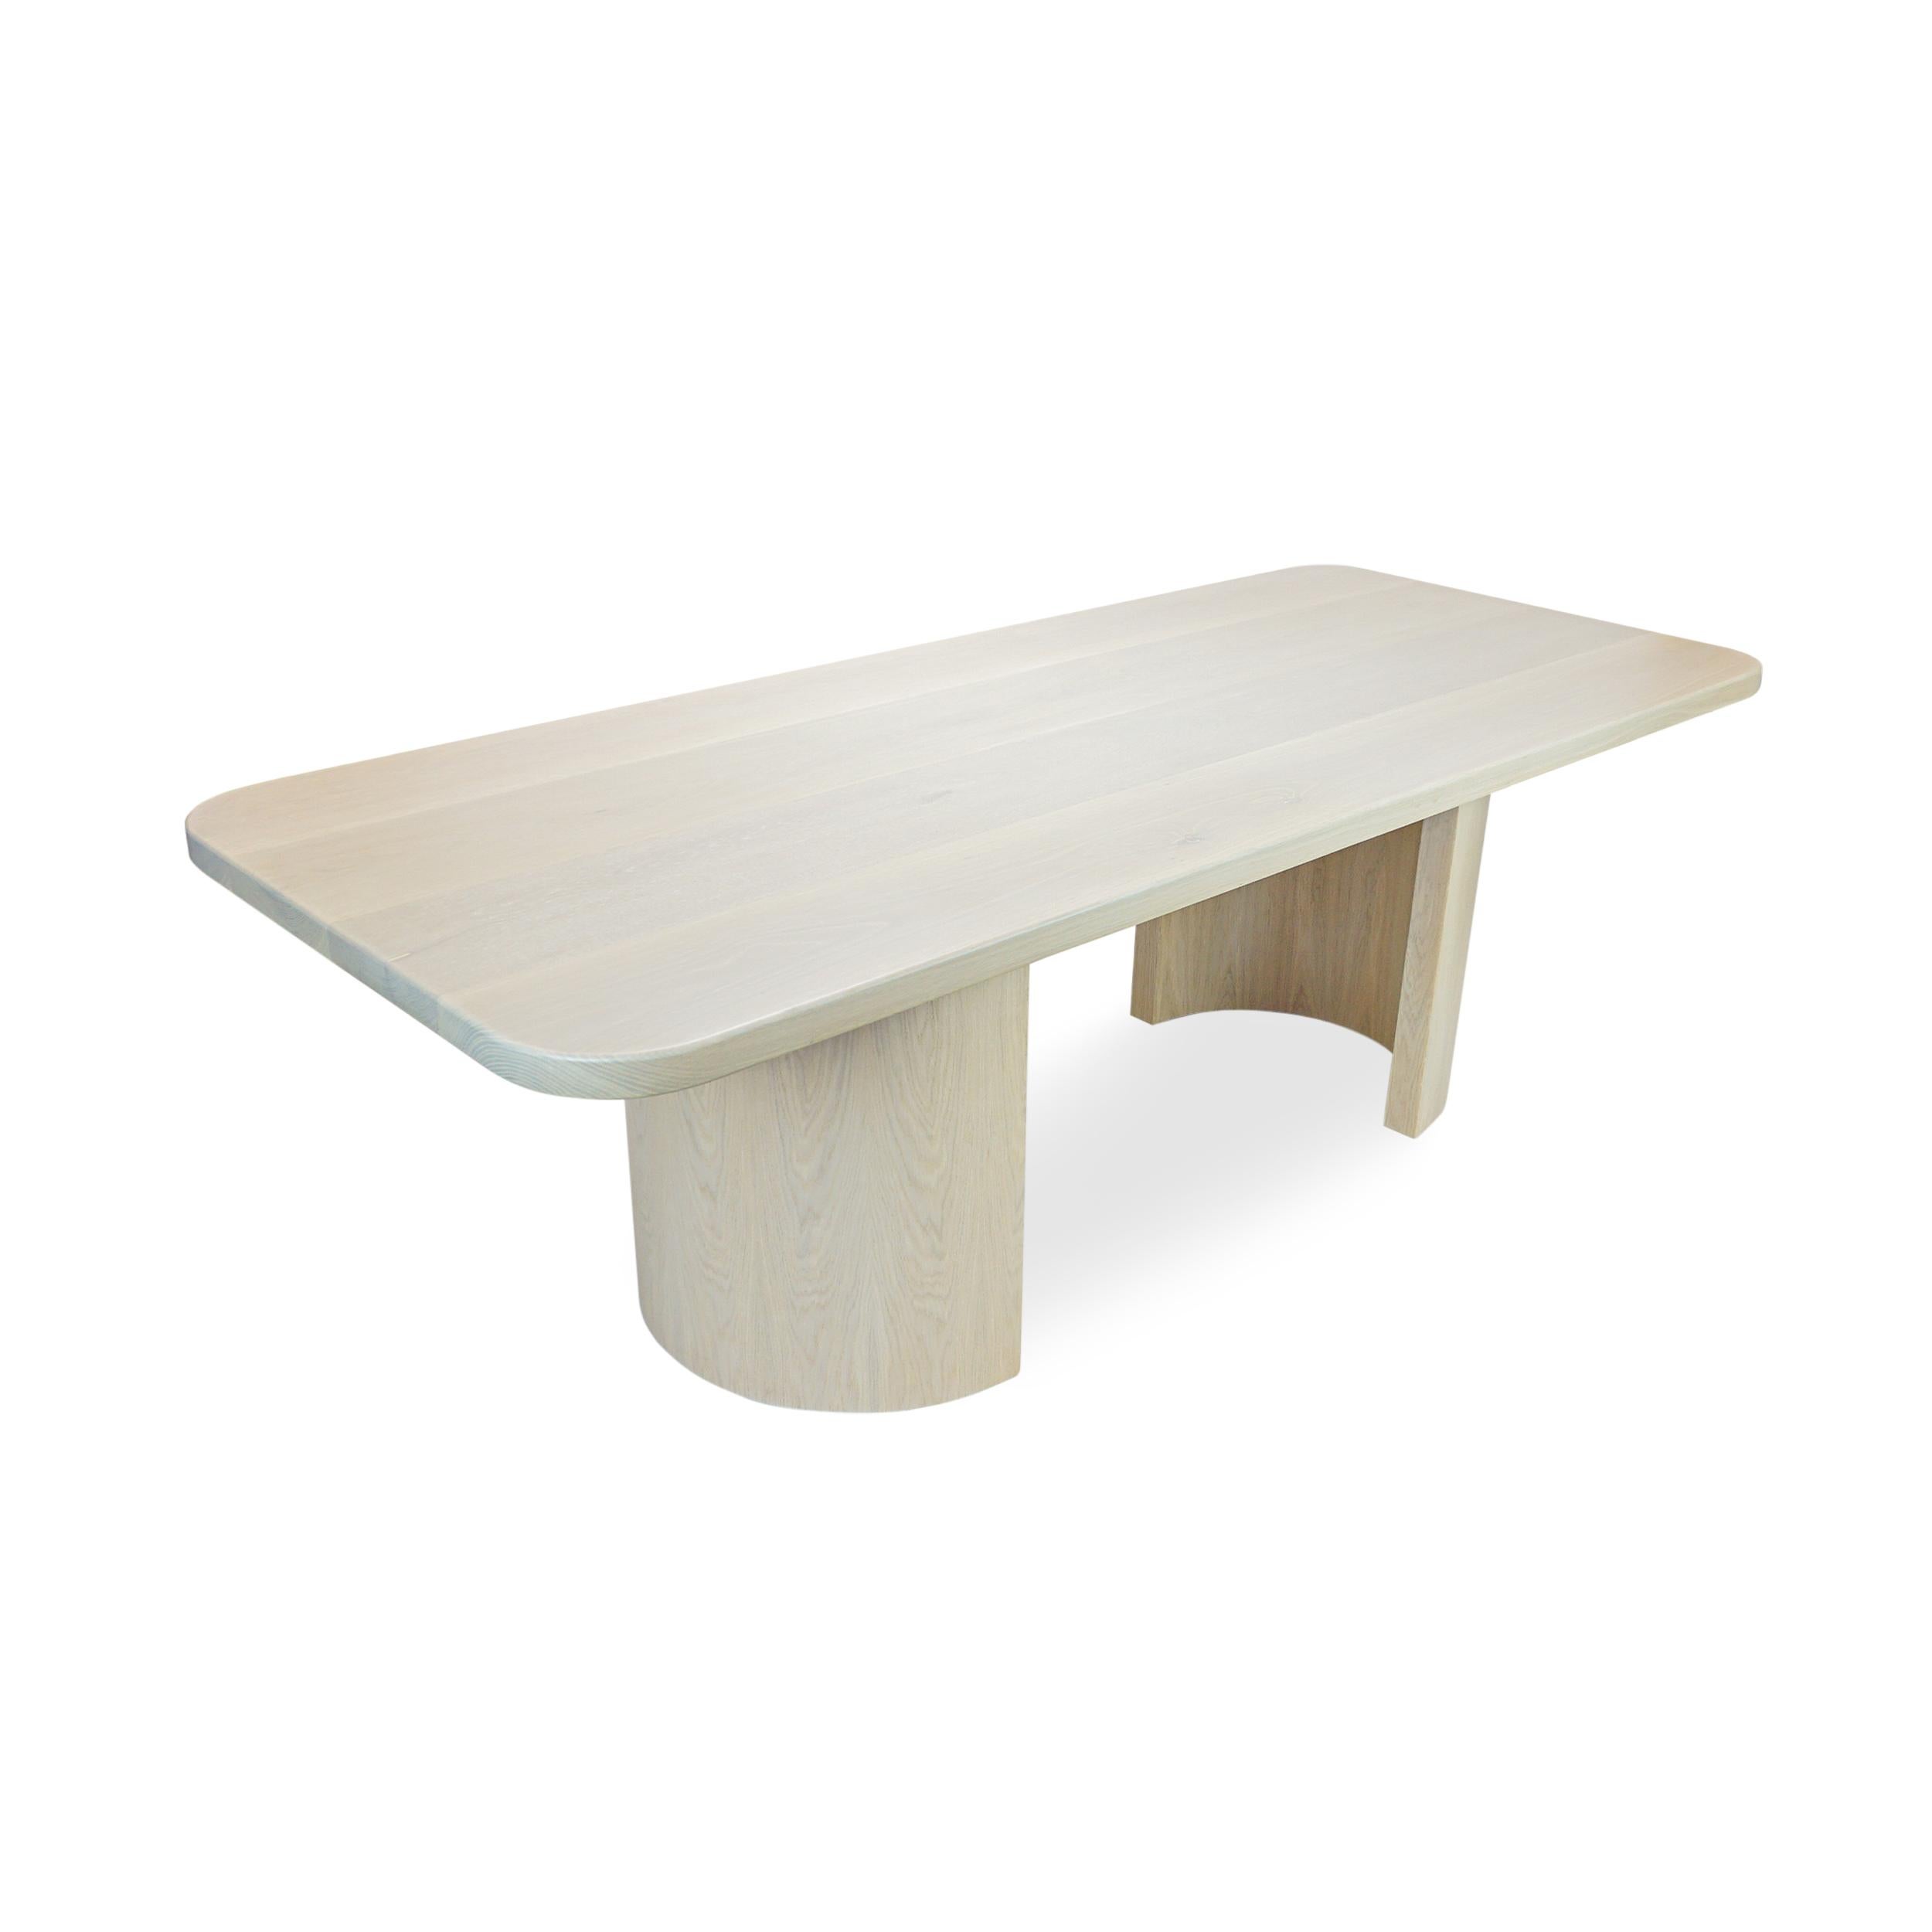 American Modern Rectangular White Oak Dining Table W/ Half Cylinder Legs + Round Corners For Sale